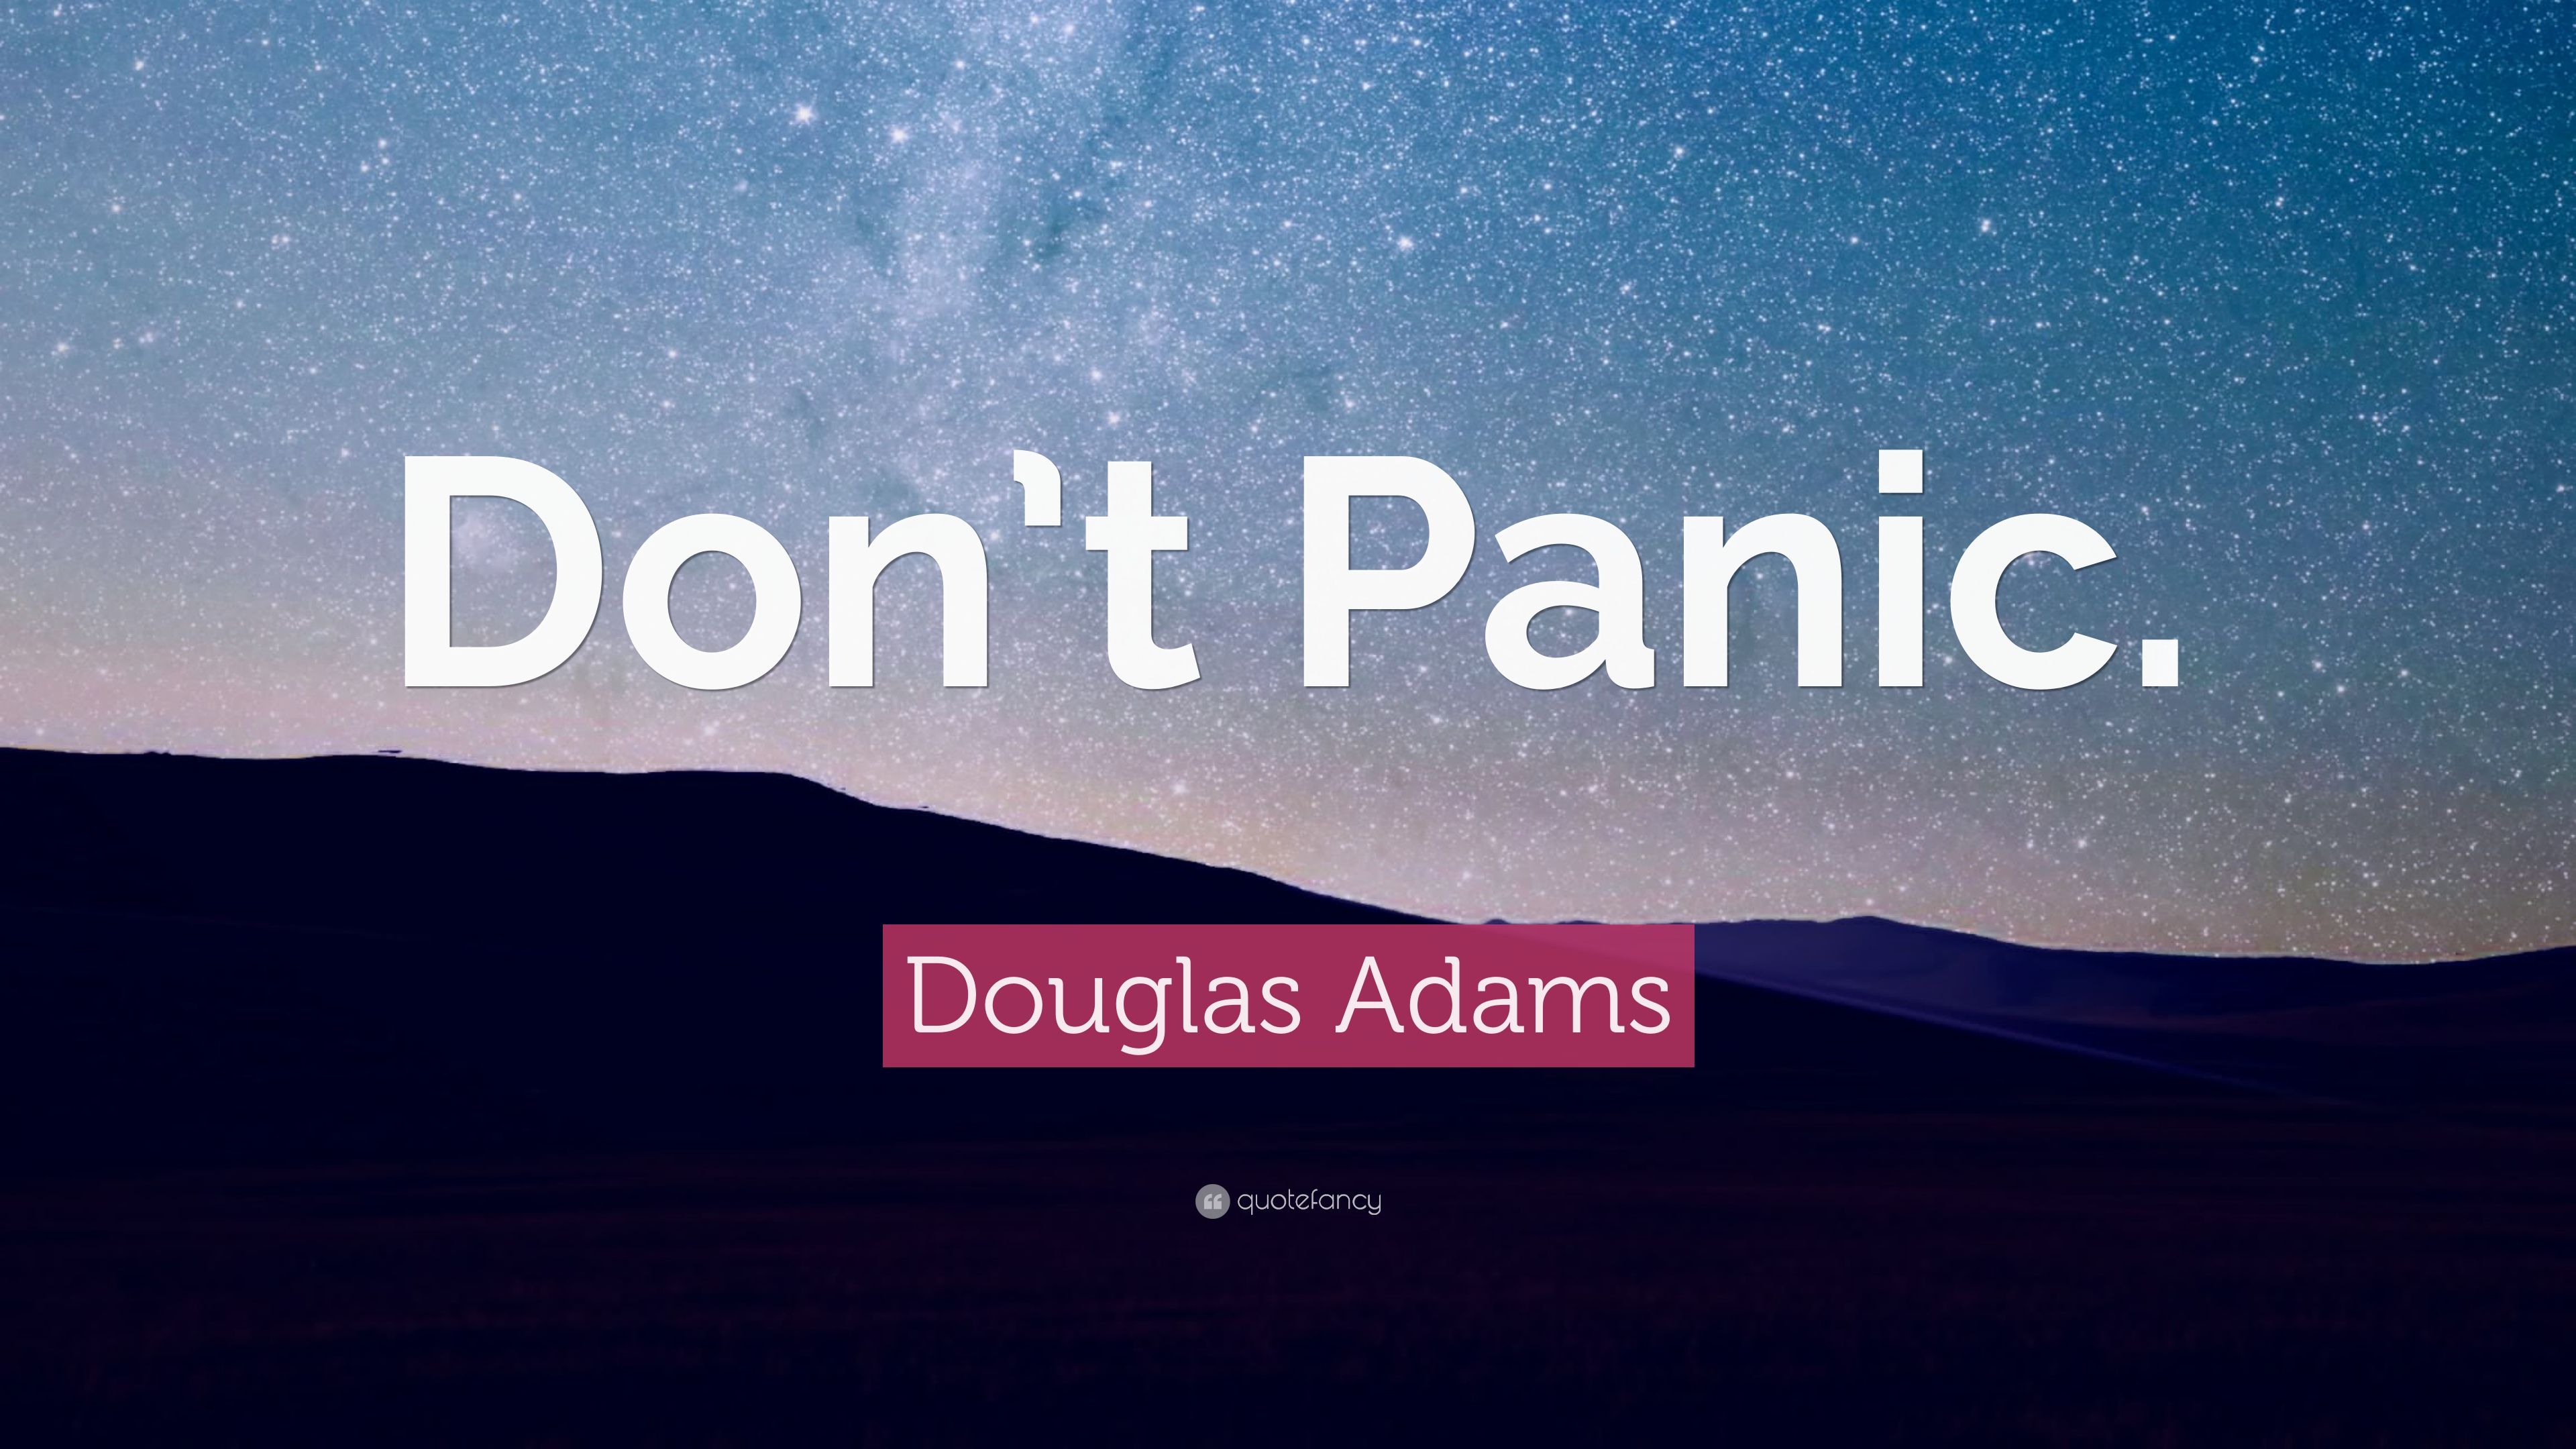 Douglas Adams Quote: “Don't Panic.” (11 wallpapers) - Quotefancy